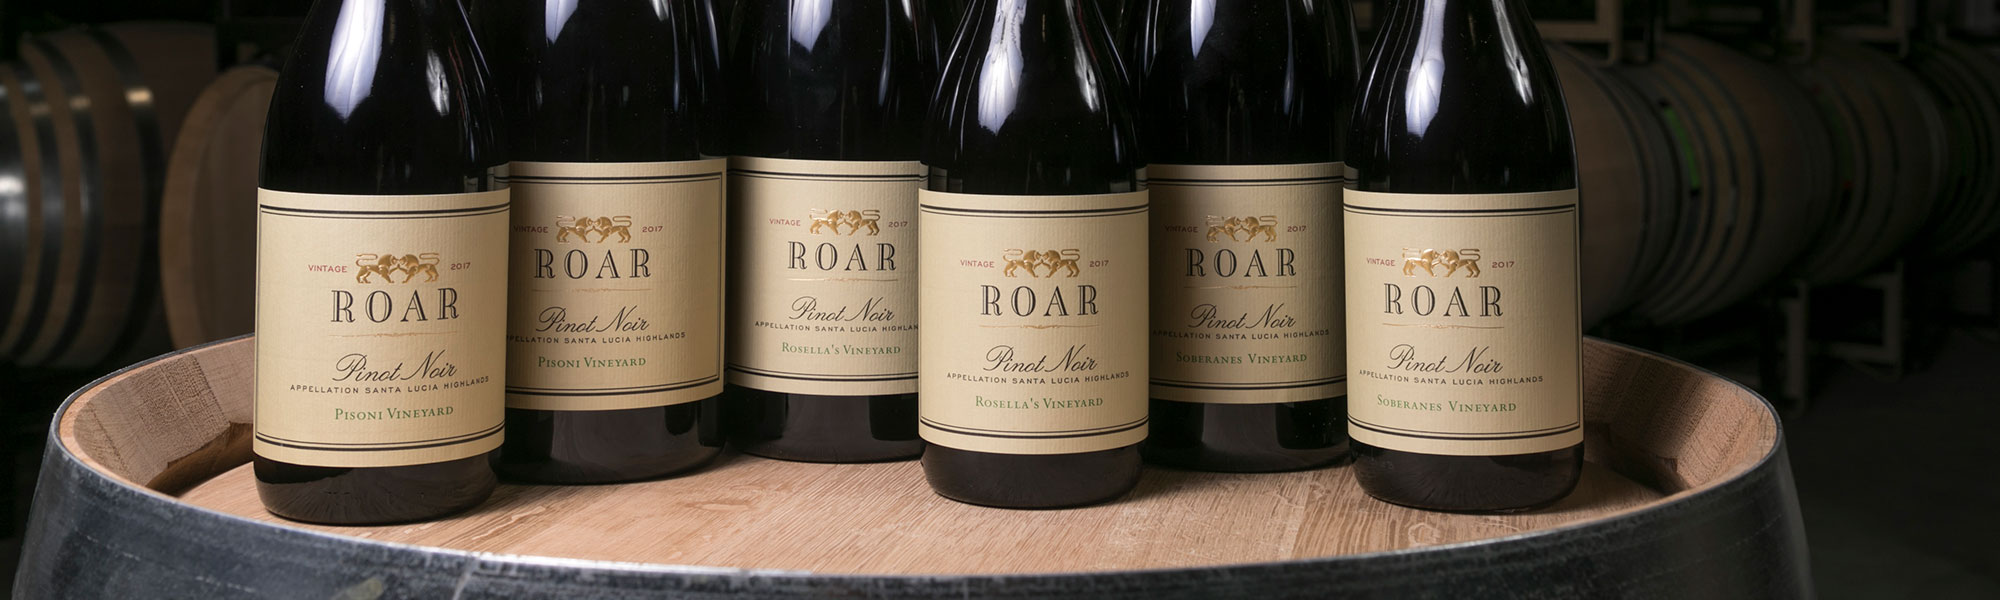 Acclaim  ROAR Wines